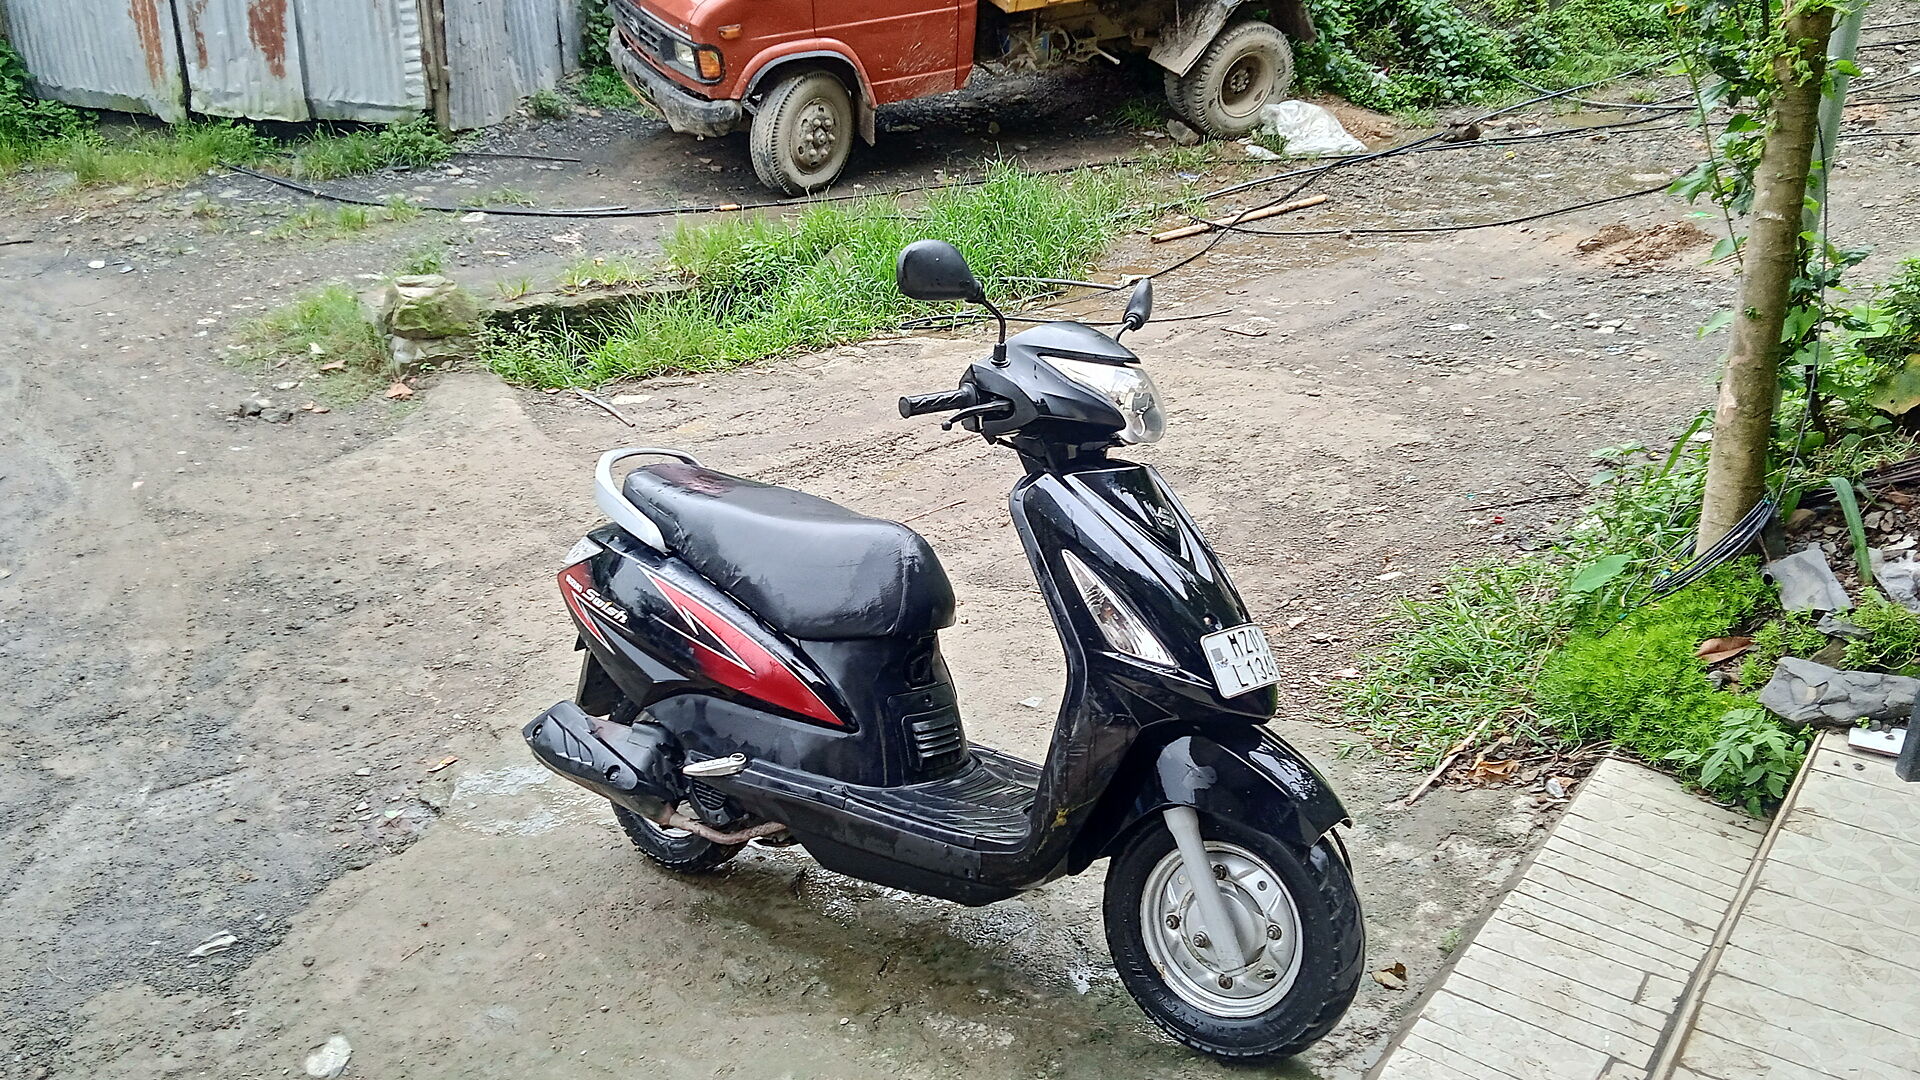 Scooty Two Wheeler Spare Parts Of Suzuki Swish In Patna, Bihar at